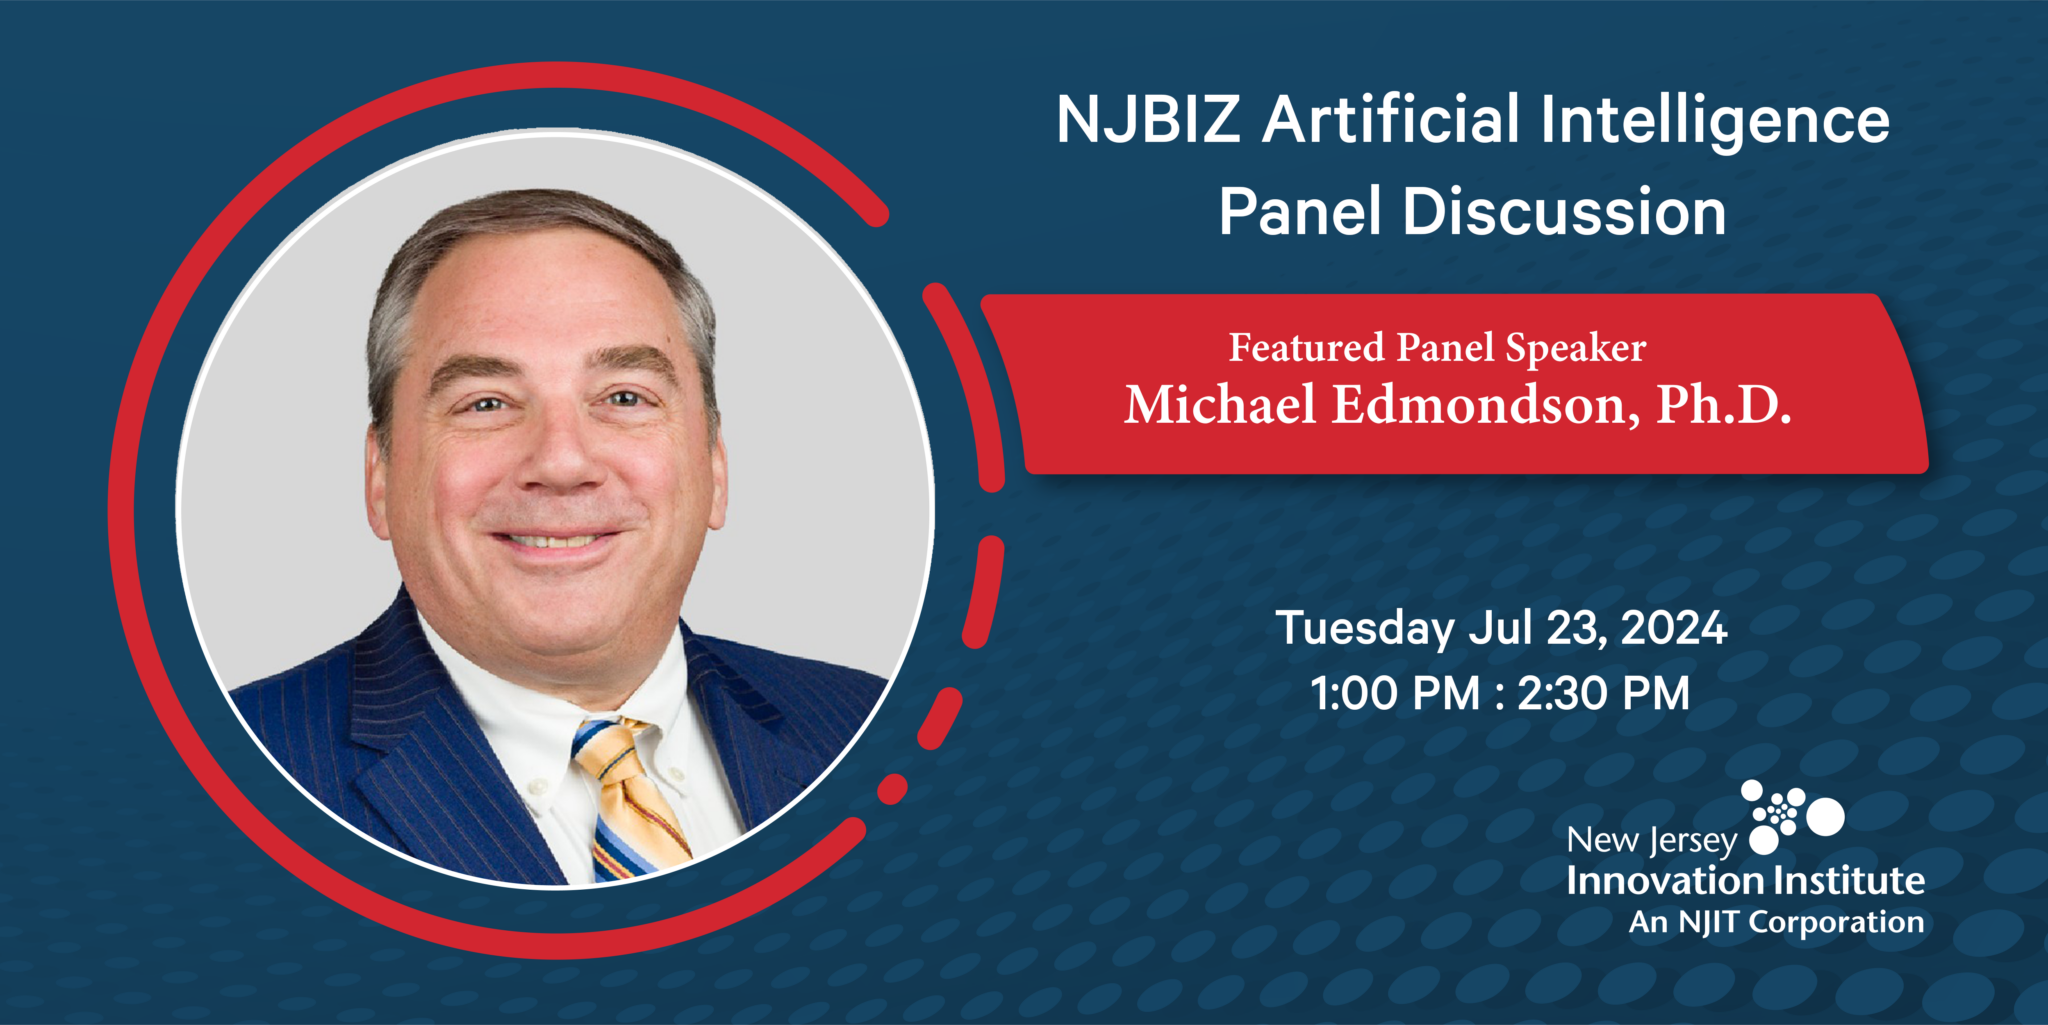 Michael Edmondson headshot and panel information for NJBIZ Artificial Intelligence (AI) panel event